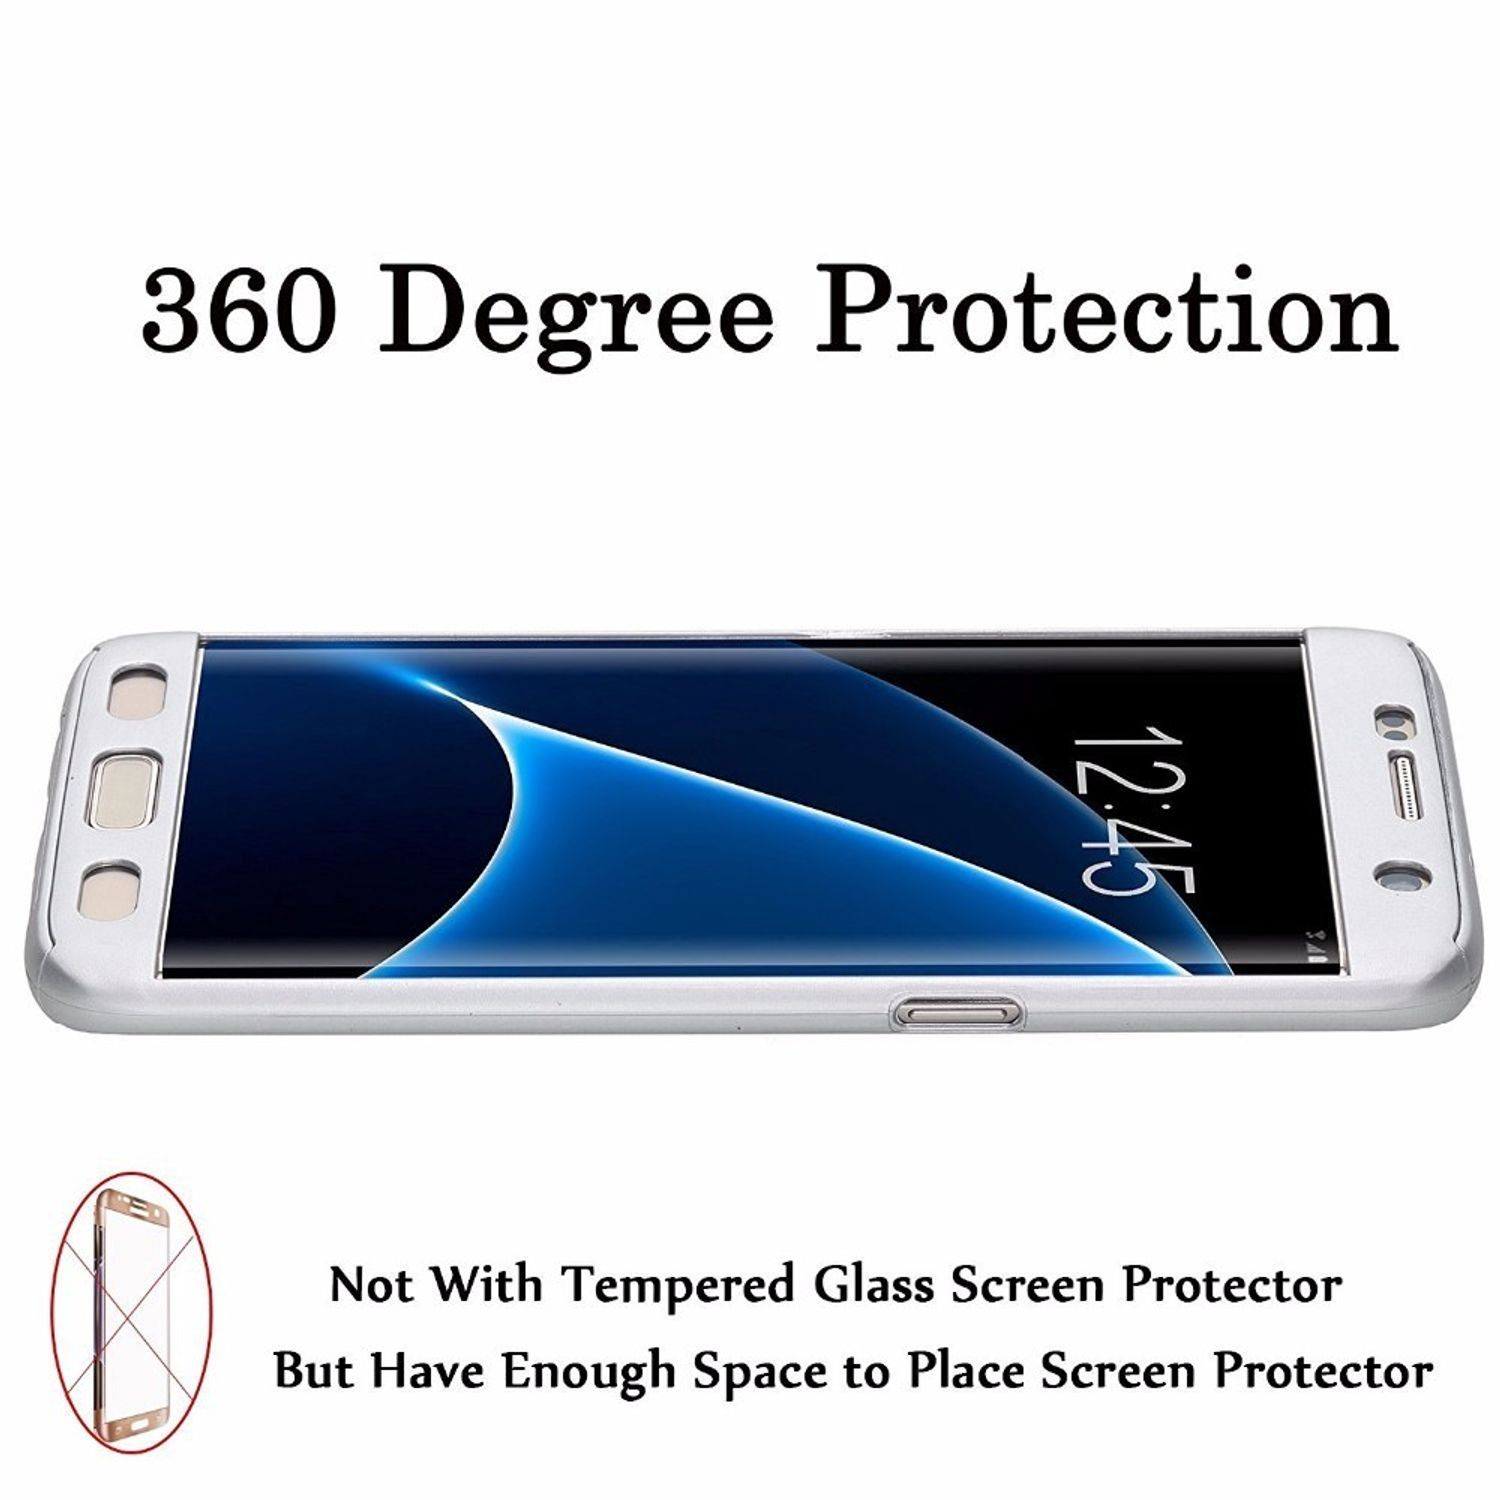 Cover, 360 Schutz, Silber Plus, DESIGN Grad KÖNIG Galaxy Edge Handyhülle S6 Samsung, Full